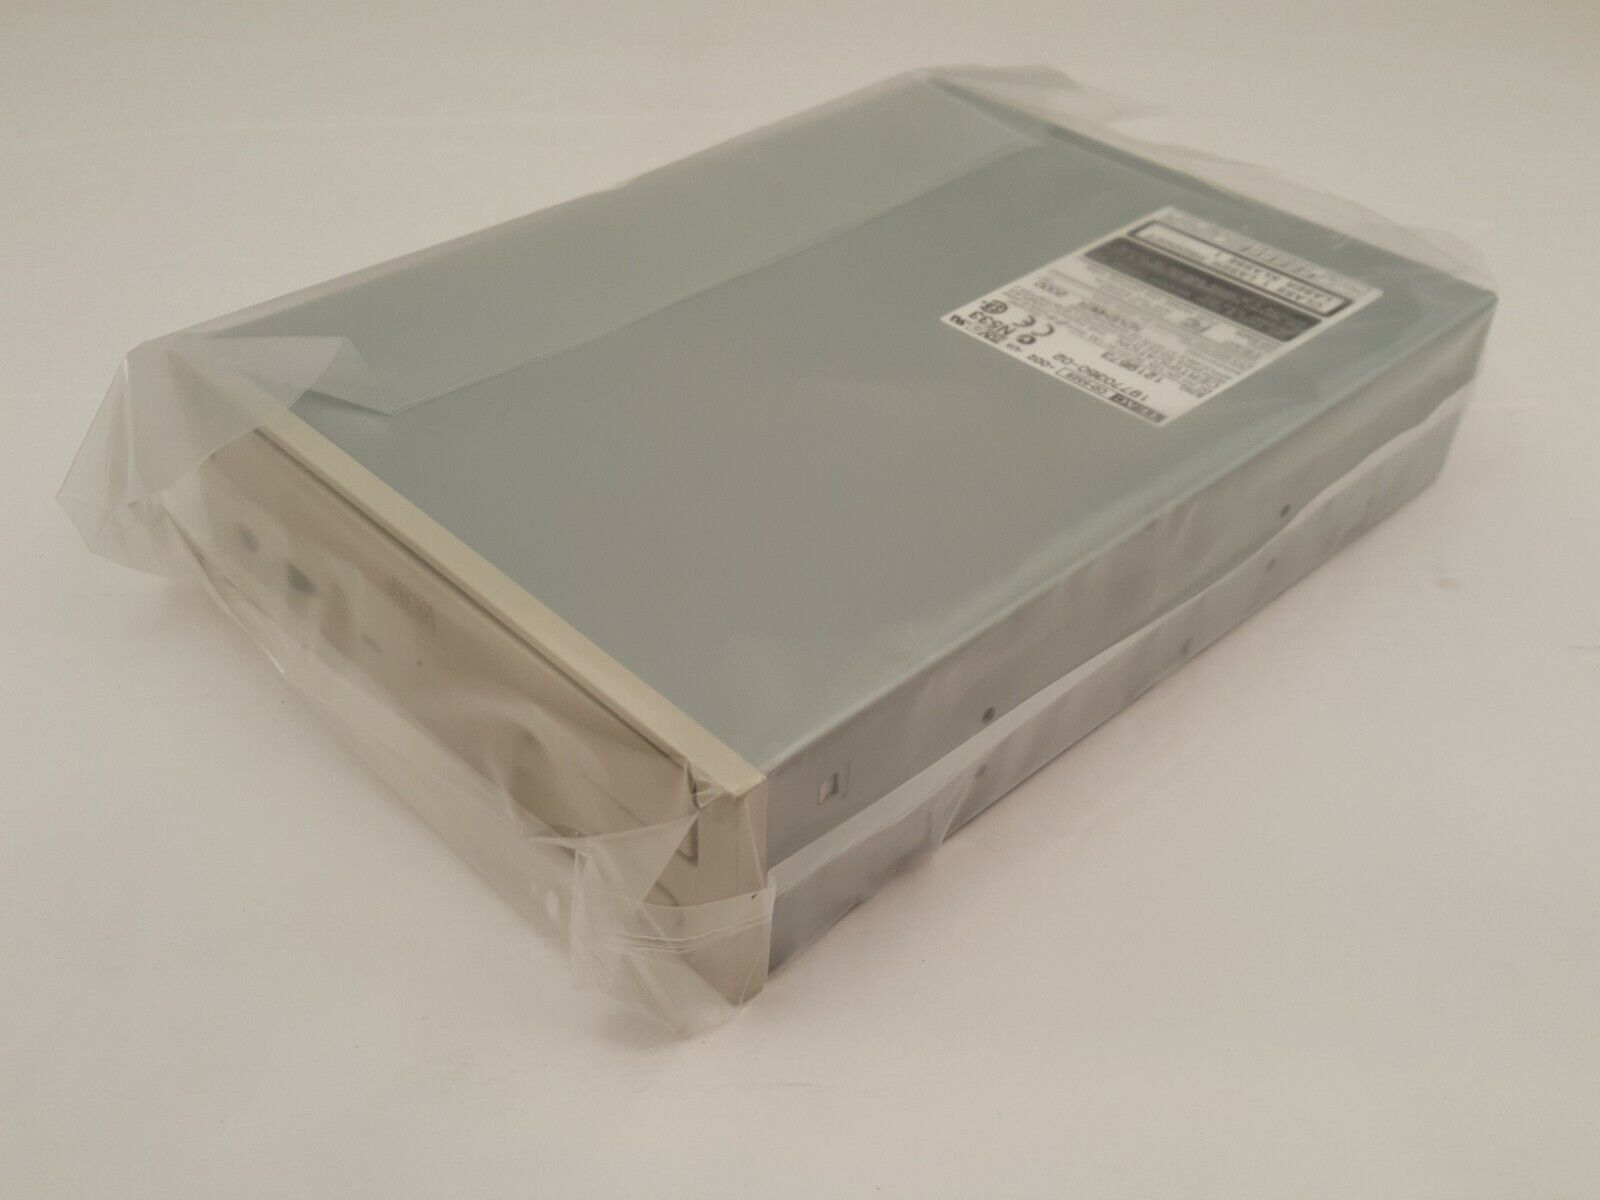 TEAC 32X CD-ROM Drive | 50 Pin SCSI Interface | Model CD532S | 19770350-02 | NEW